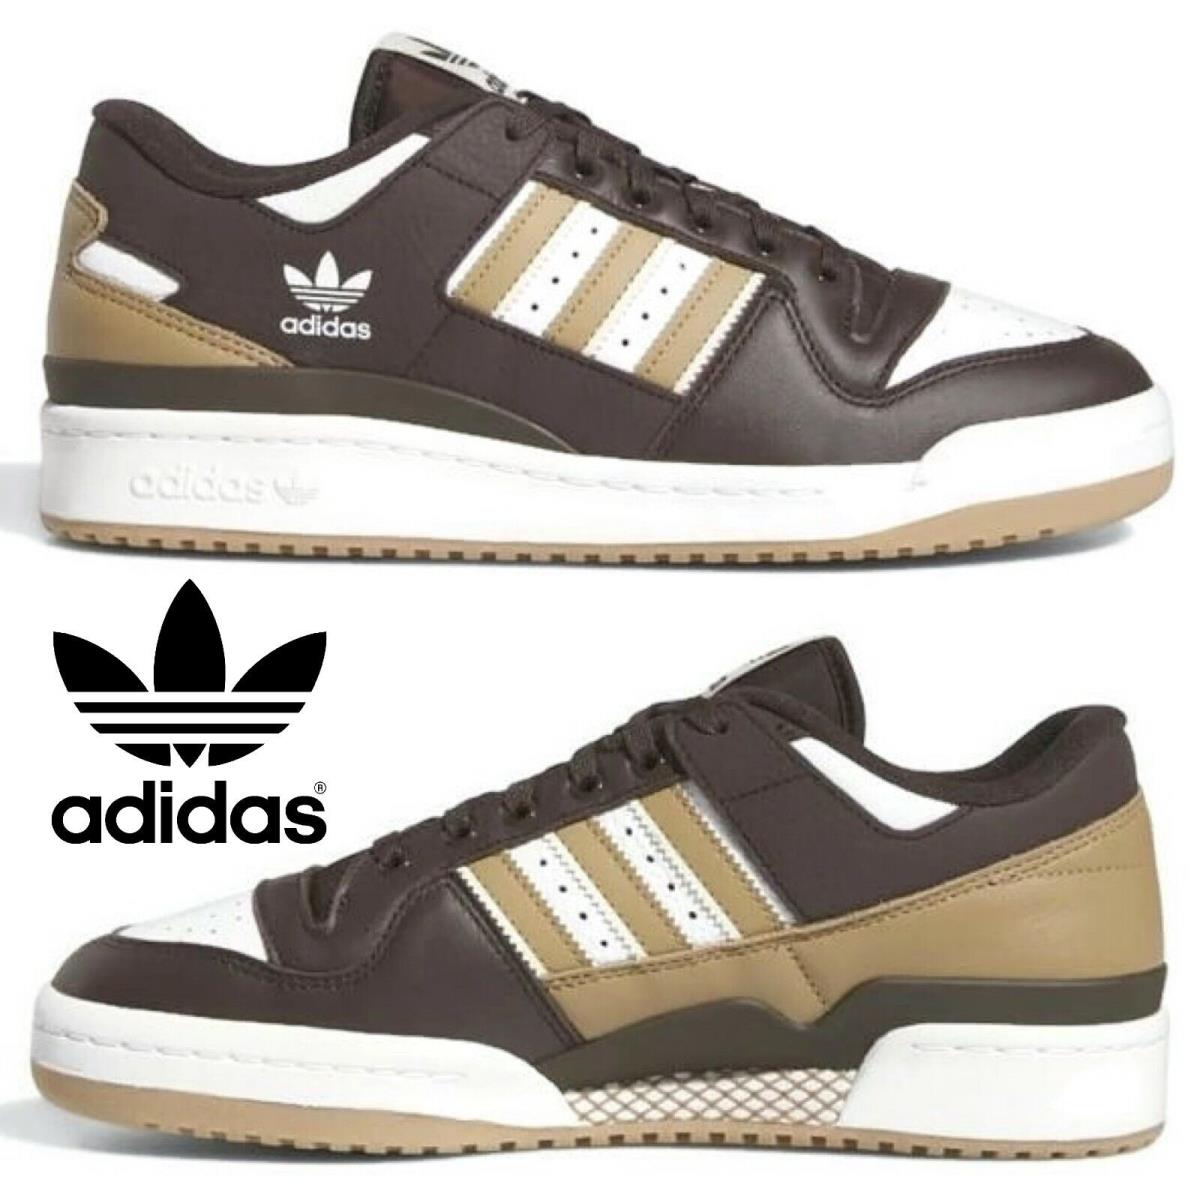 Adidas Originals Forum Low Men`s Sneakers Comfort Sport Casual Shoes Brown White